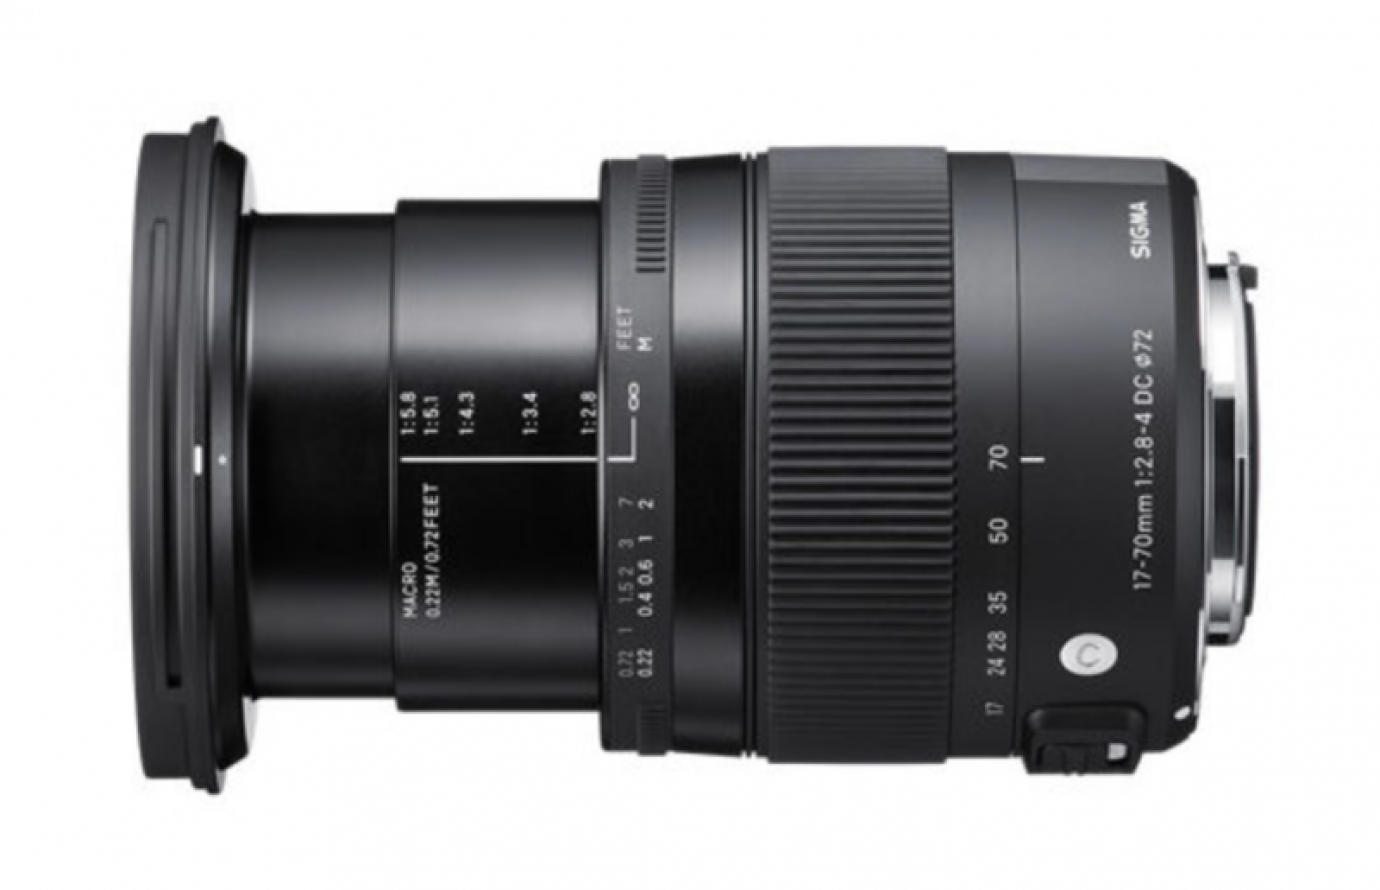 Sigma объективы для Nikon 17-70. Sigma 17 70 f 2.8 4 DC macro for Sony. Sigma 17-70mm f/2.8-4 DC macro. Sigma 17-70mm_f2.8-4 macro HSM.